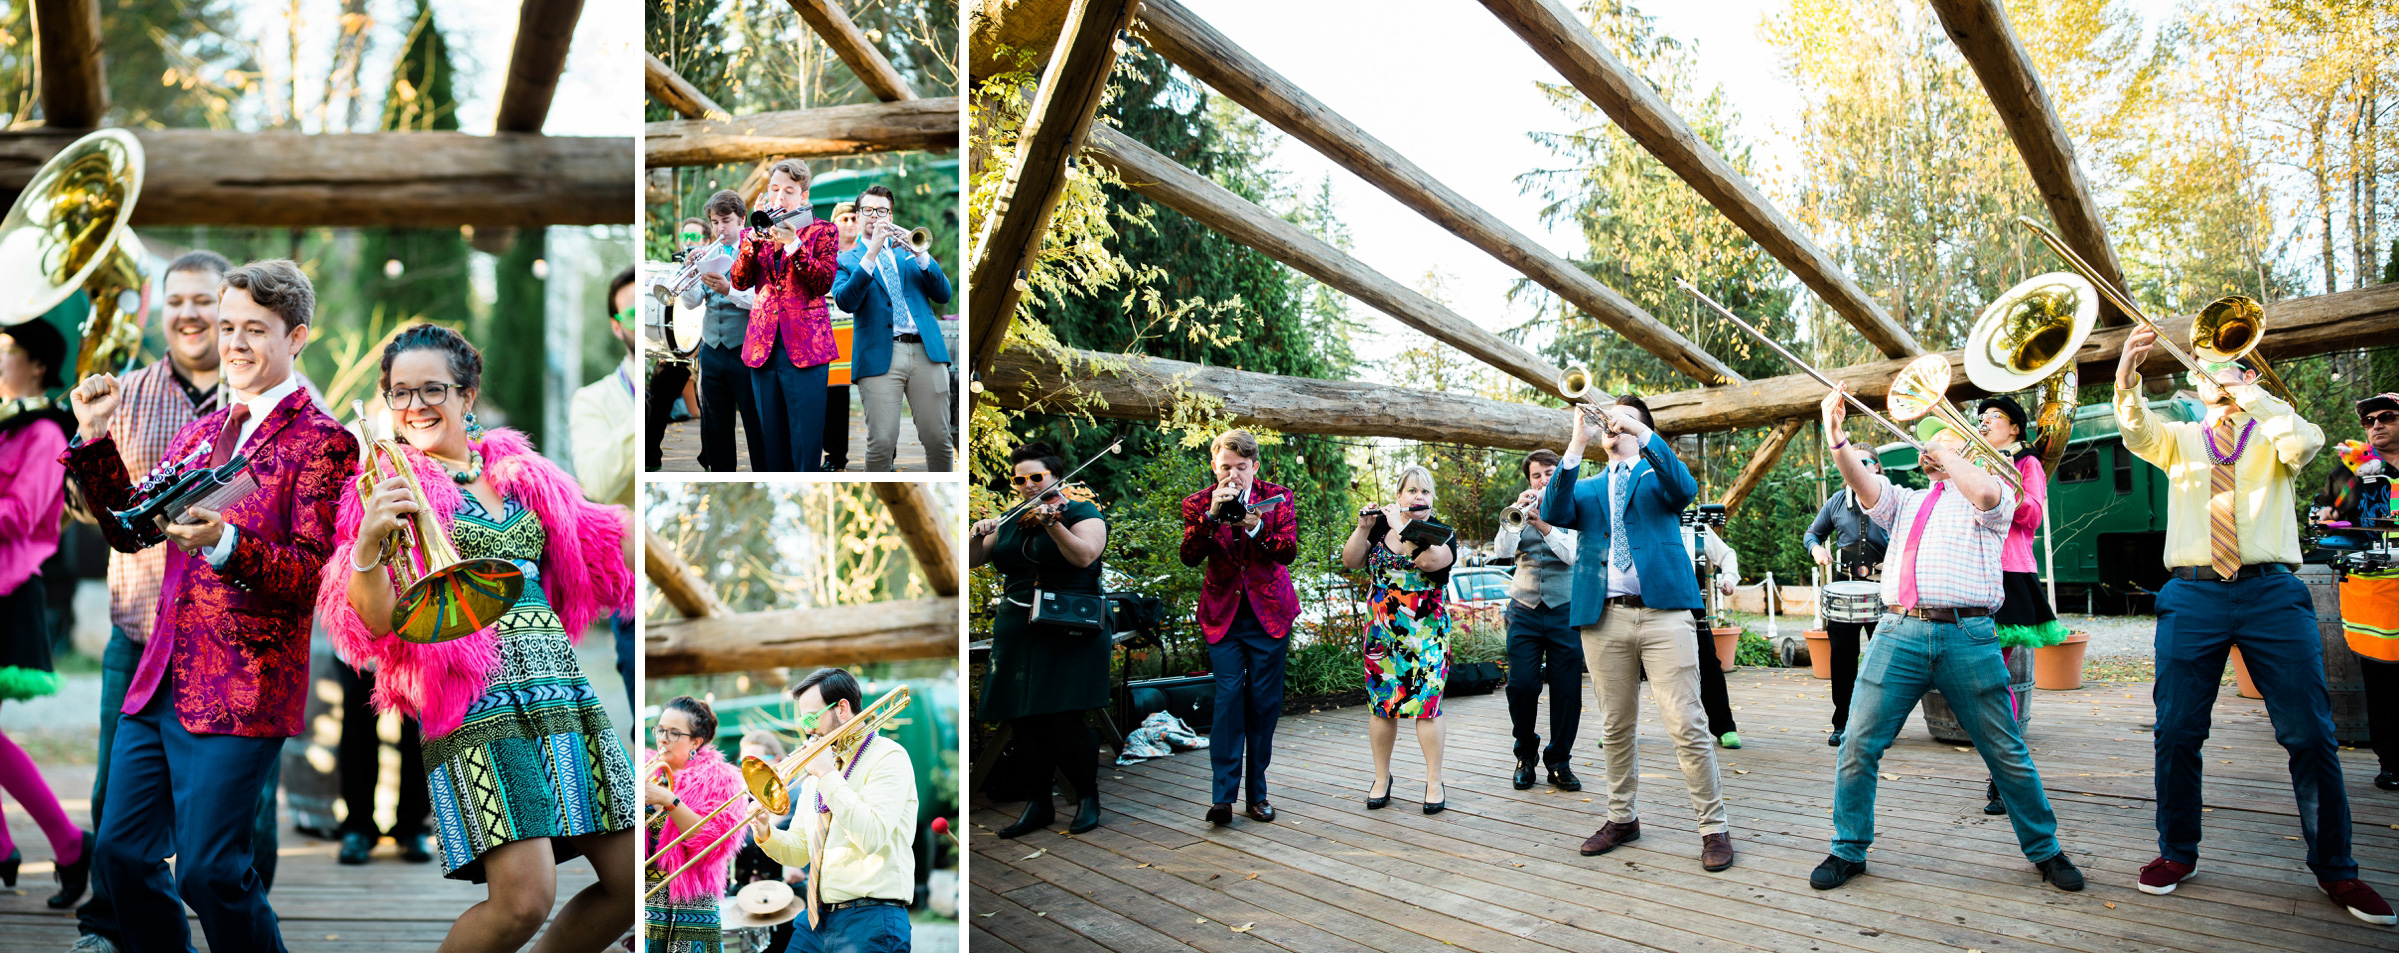 30-Black-Diamond-Gardens-Seattle-Wedding-Photographer-Neon-Brass-Party